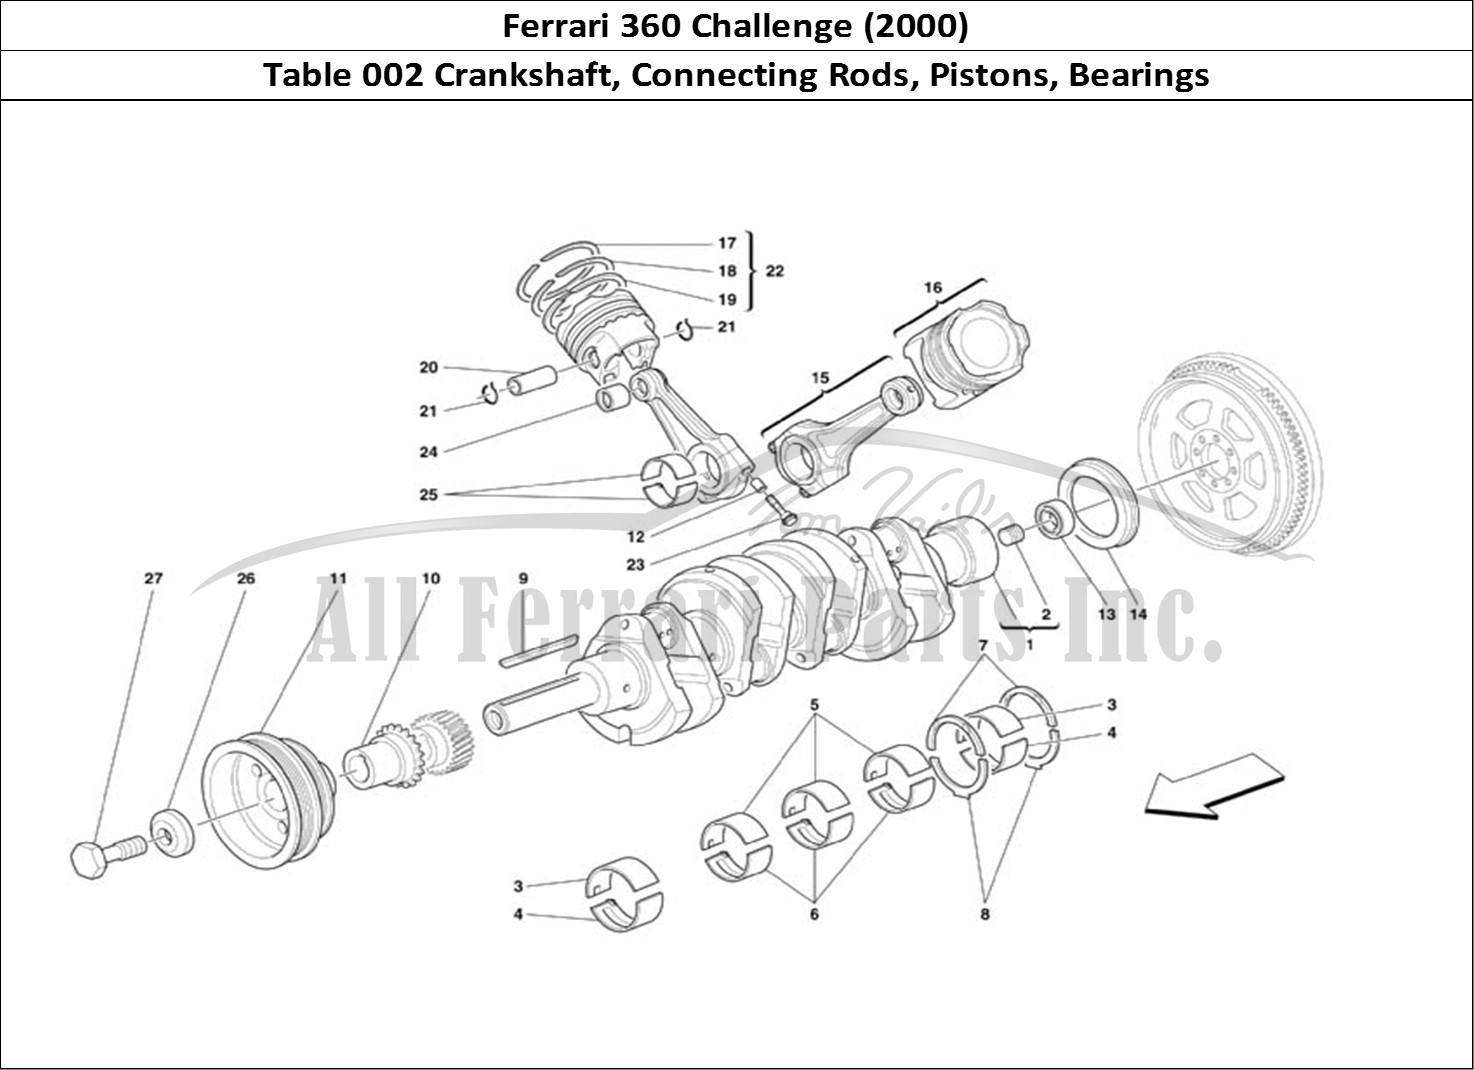 Ferrari Parts Ferrari 360 Challenge (2000) Page 002 Driving Shaft - Connectin